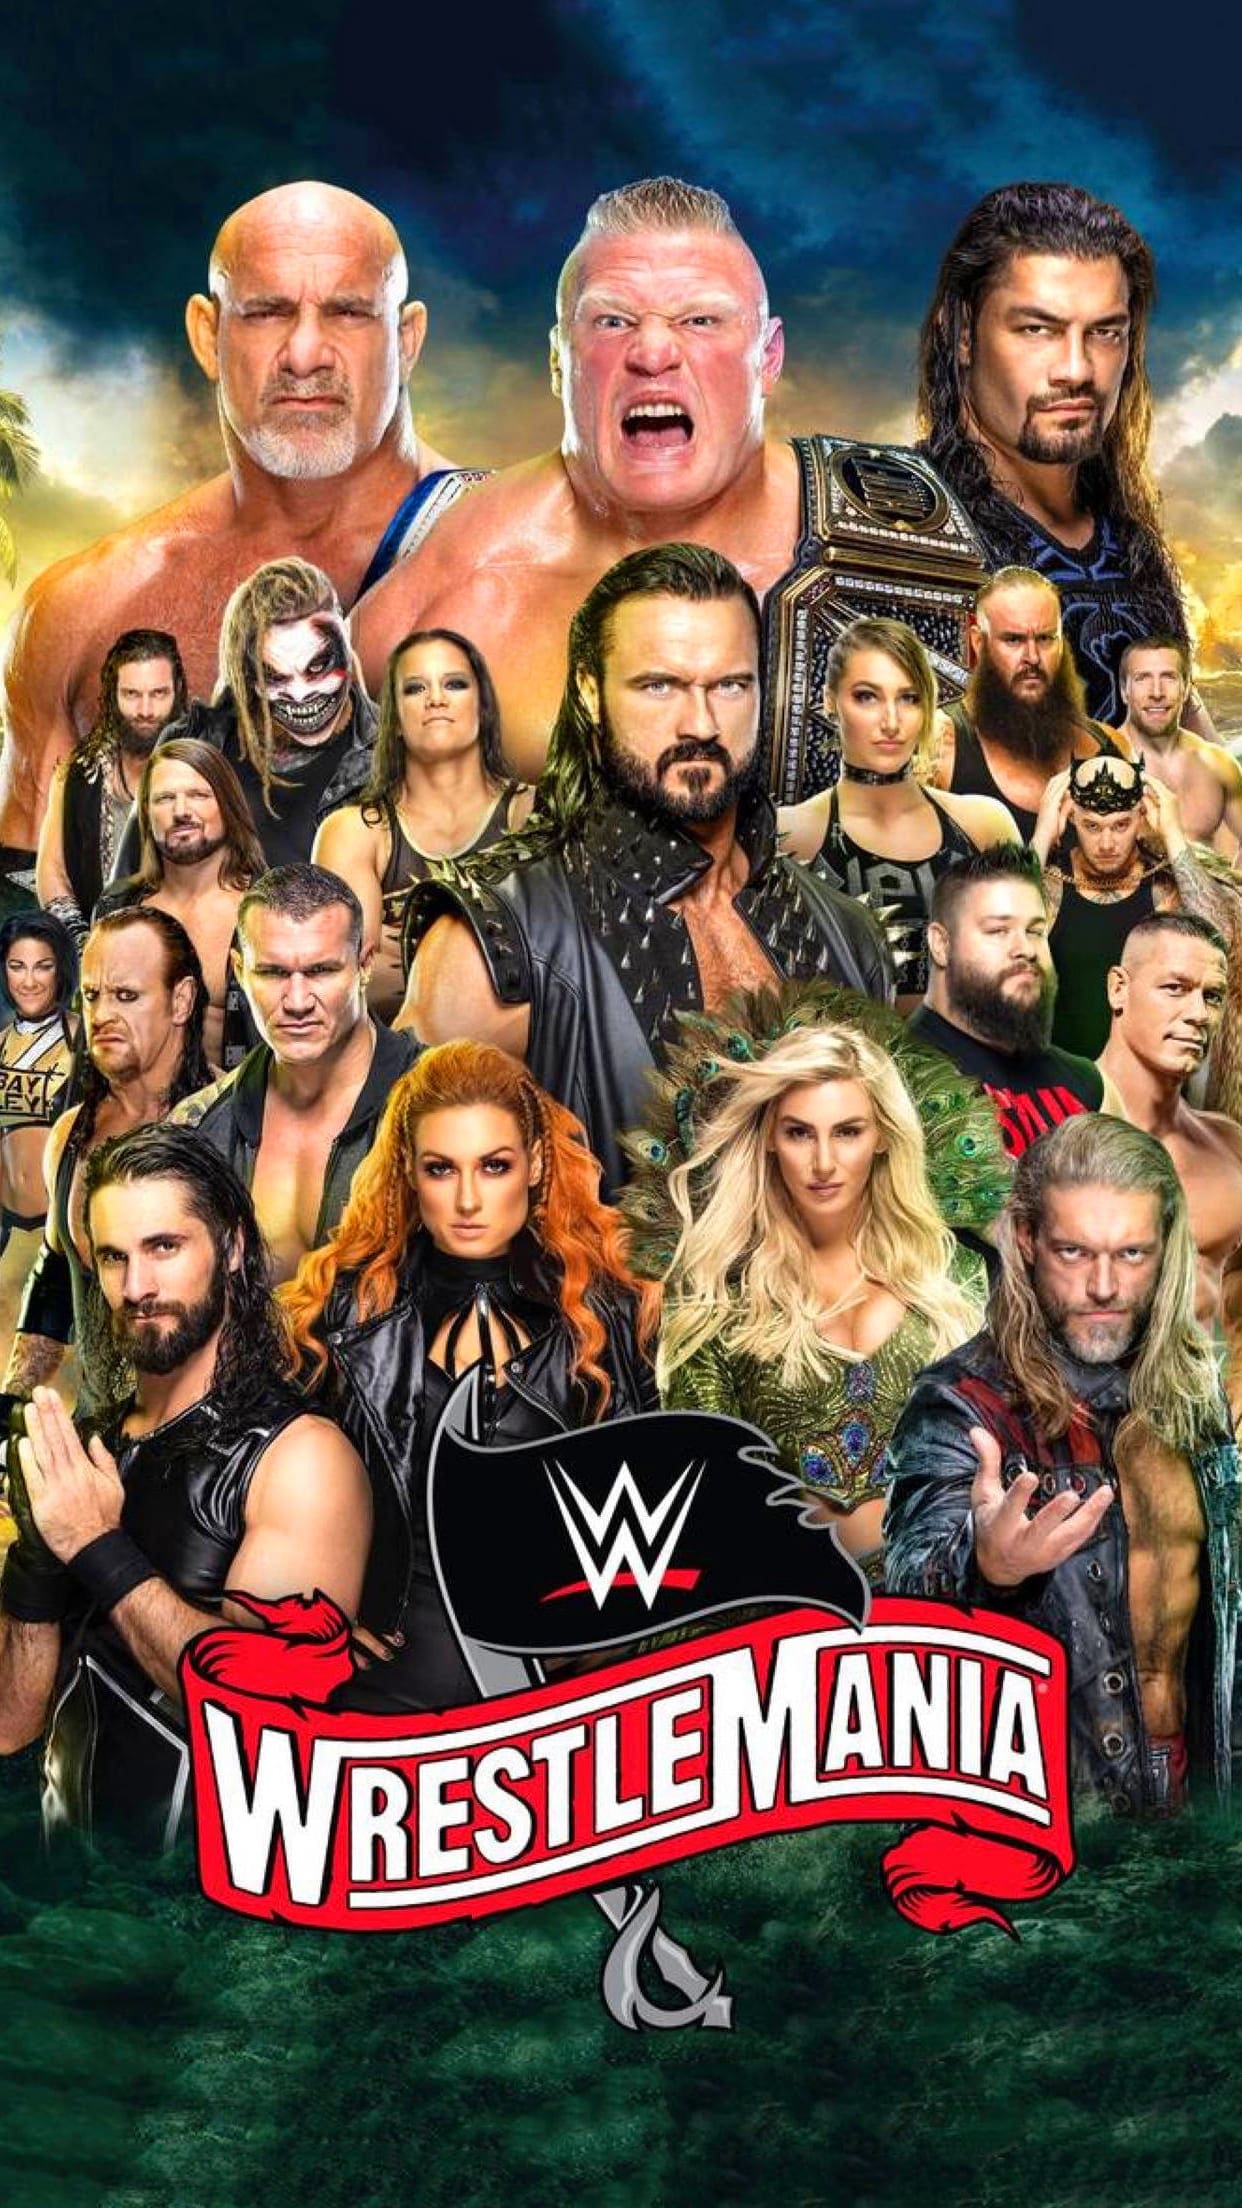 WWE Wallpapers